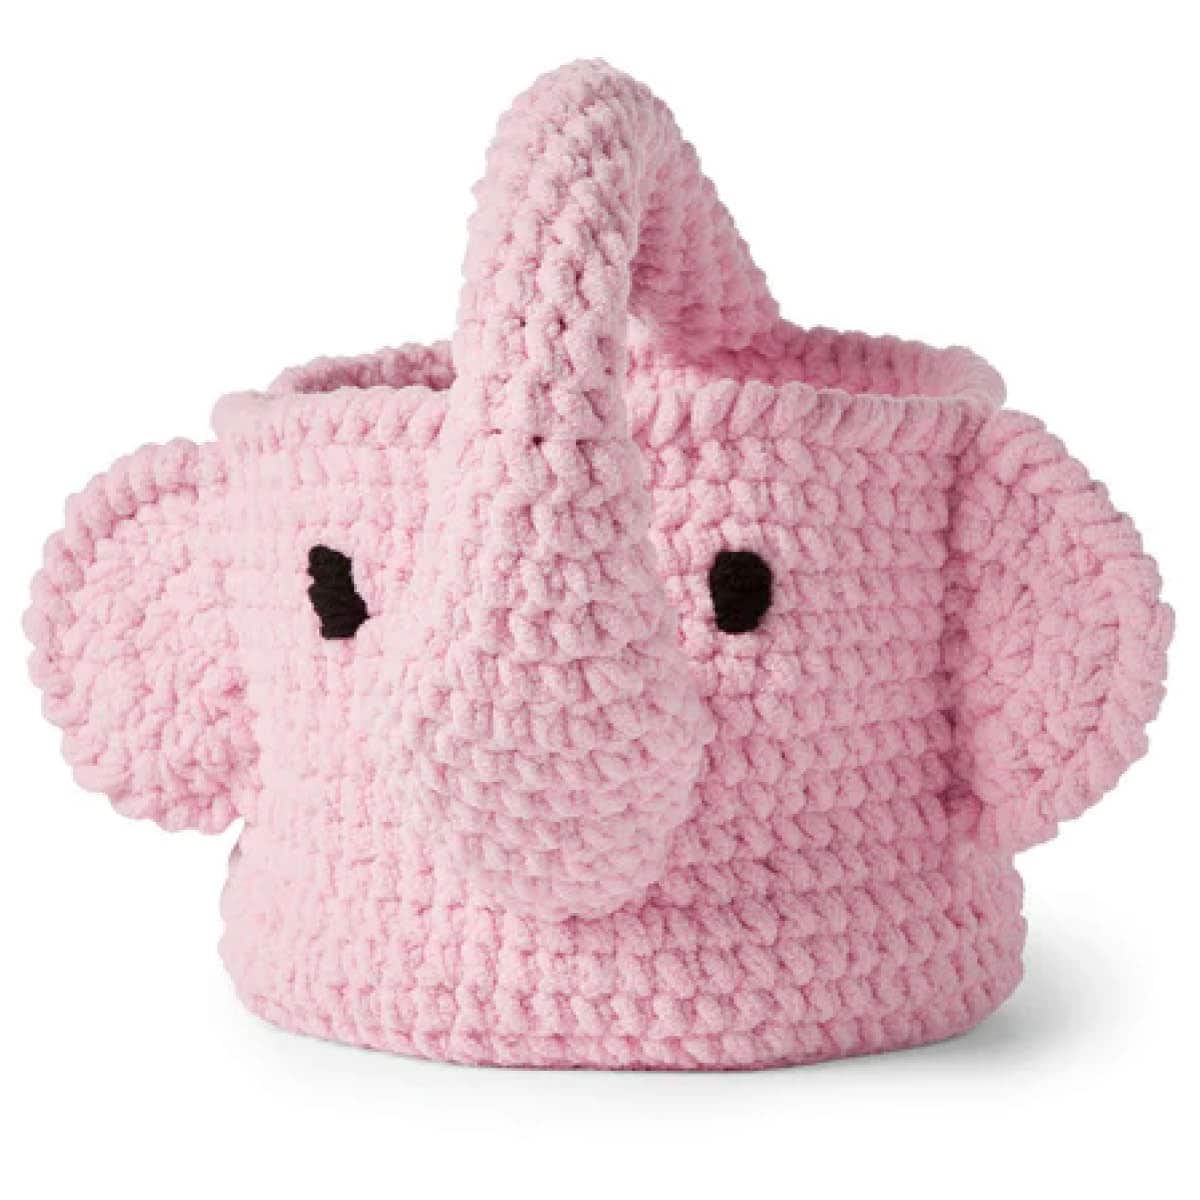 Crochet Bernat Elephant Basket Pattern